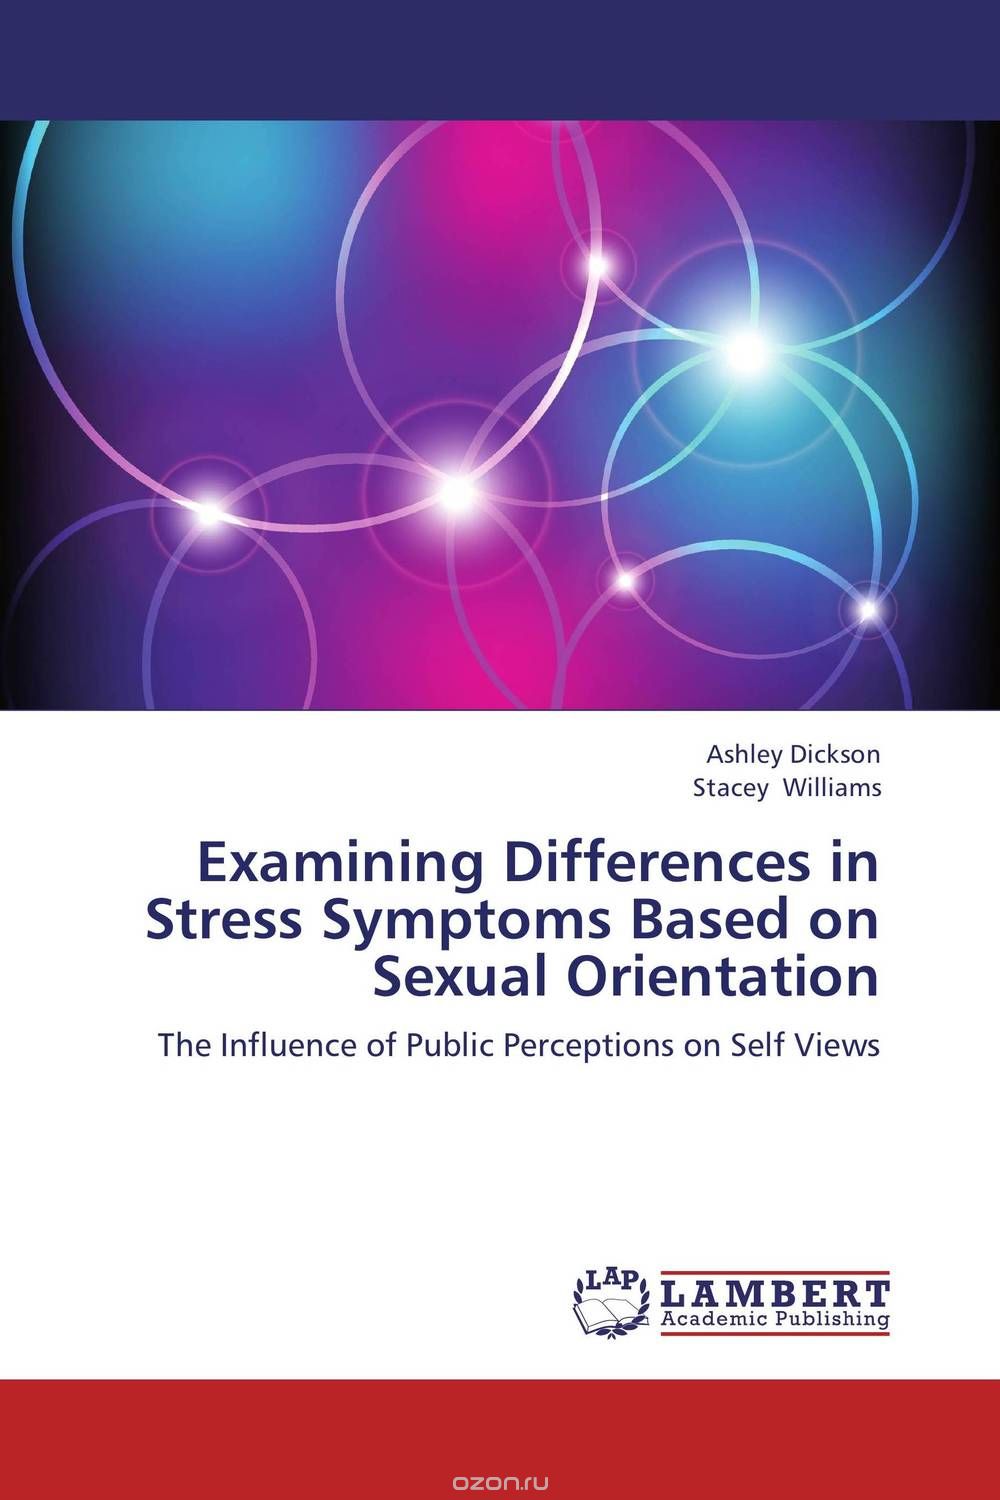 Скачать книгу "Examining Differences in Stress Symptoms Based on Sexual Orientation"